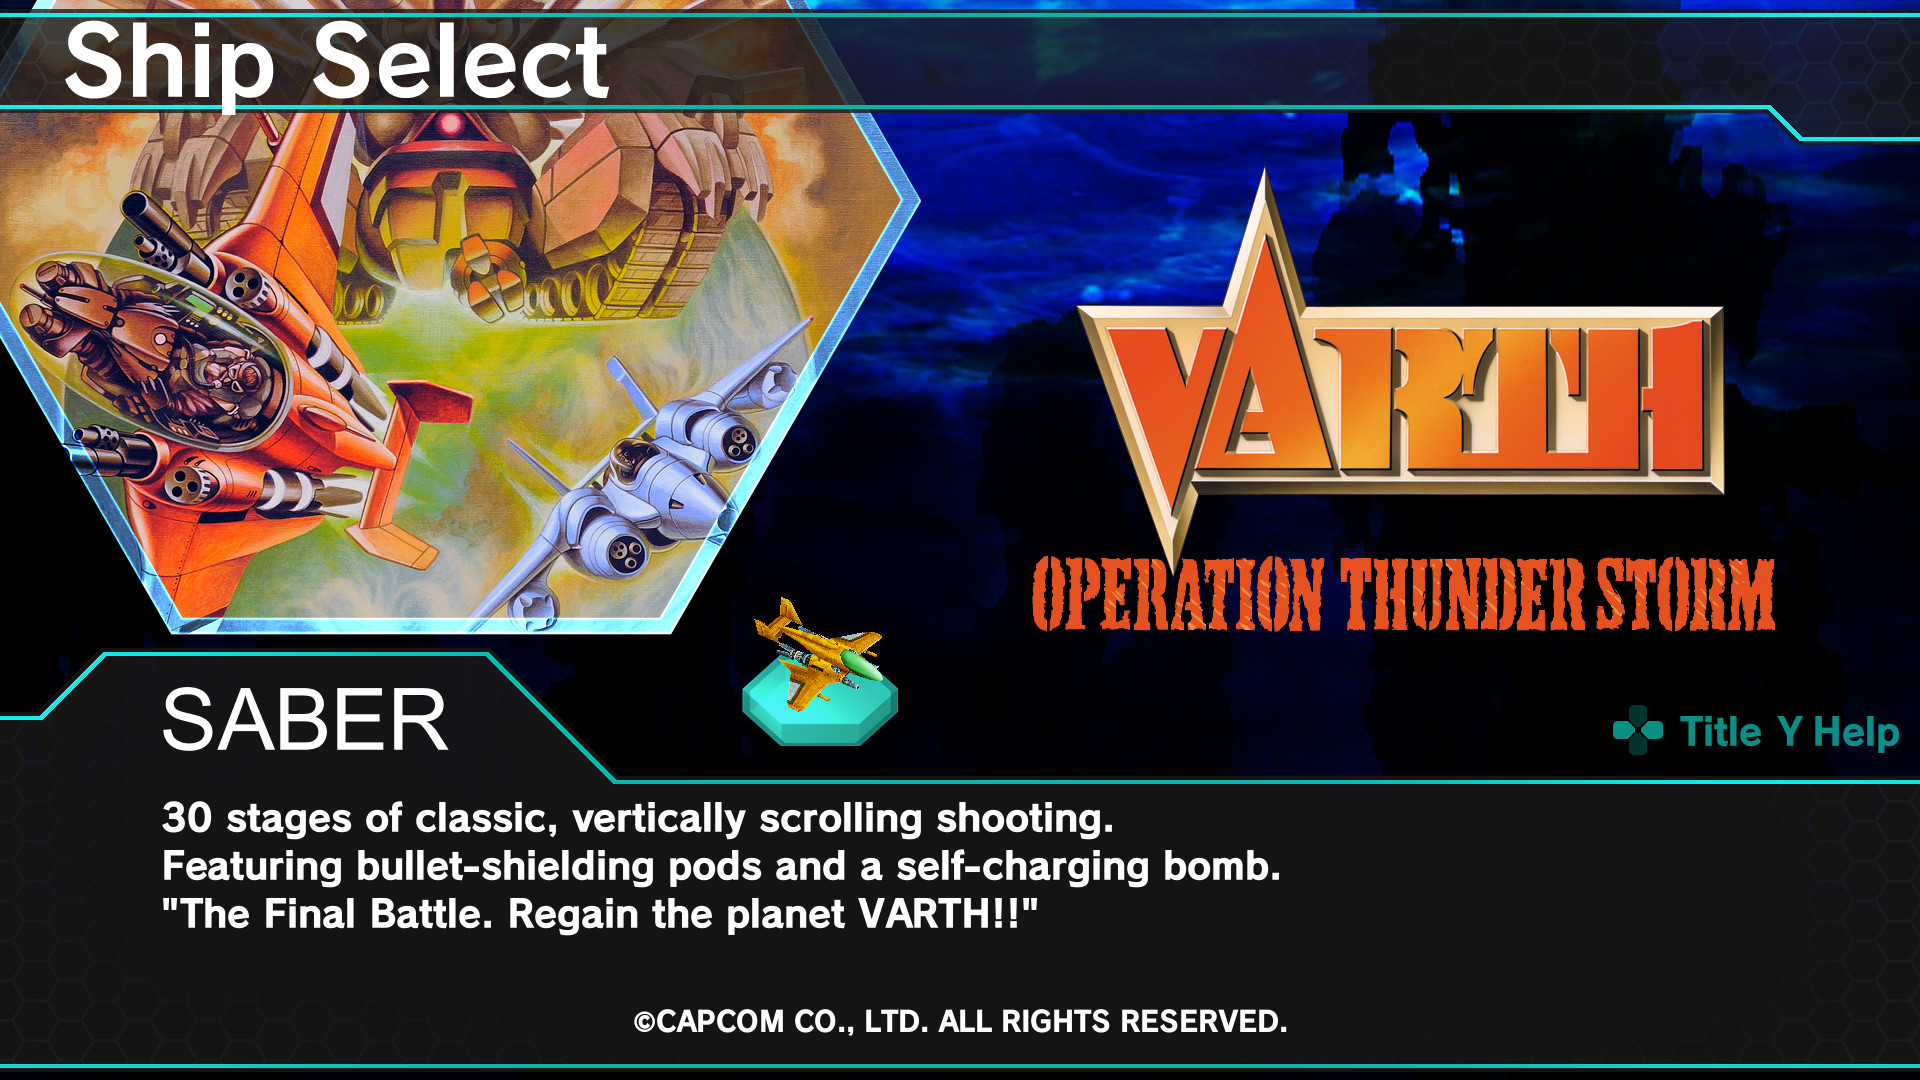 DARIUSBURST Chronicle Saviours - Varth: Operation Thunderstorm DLC Steam CD Key